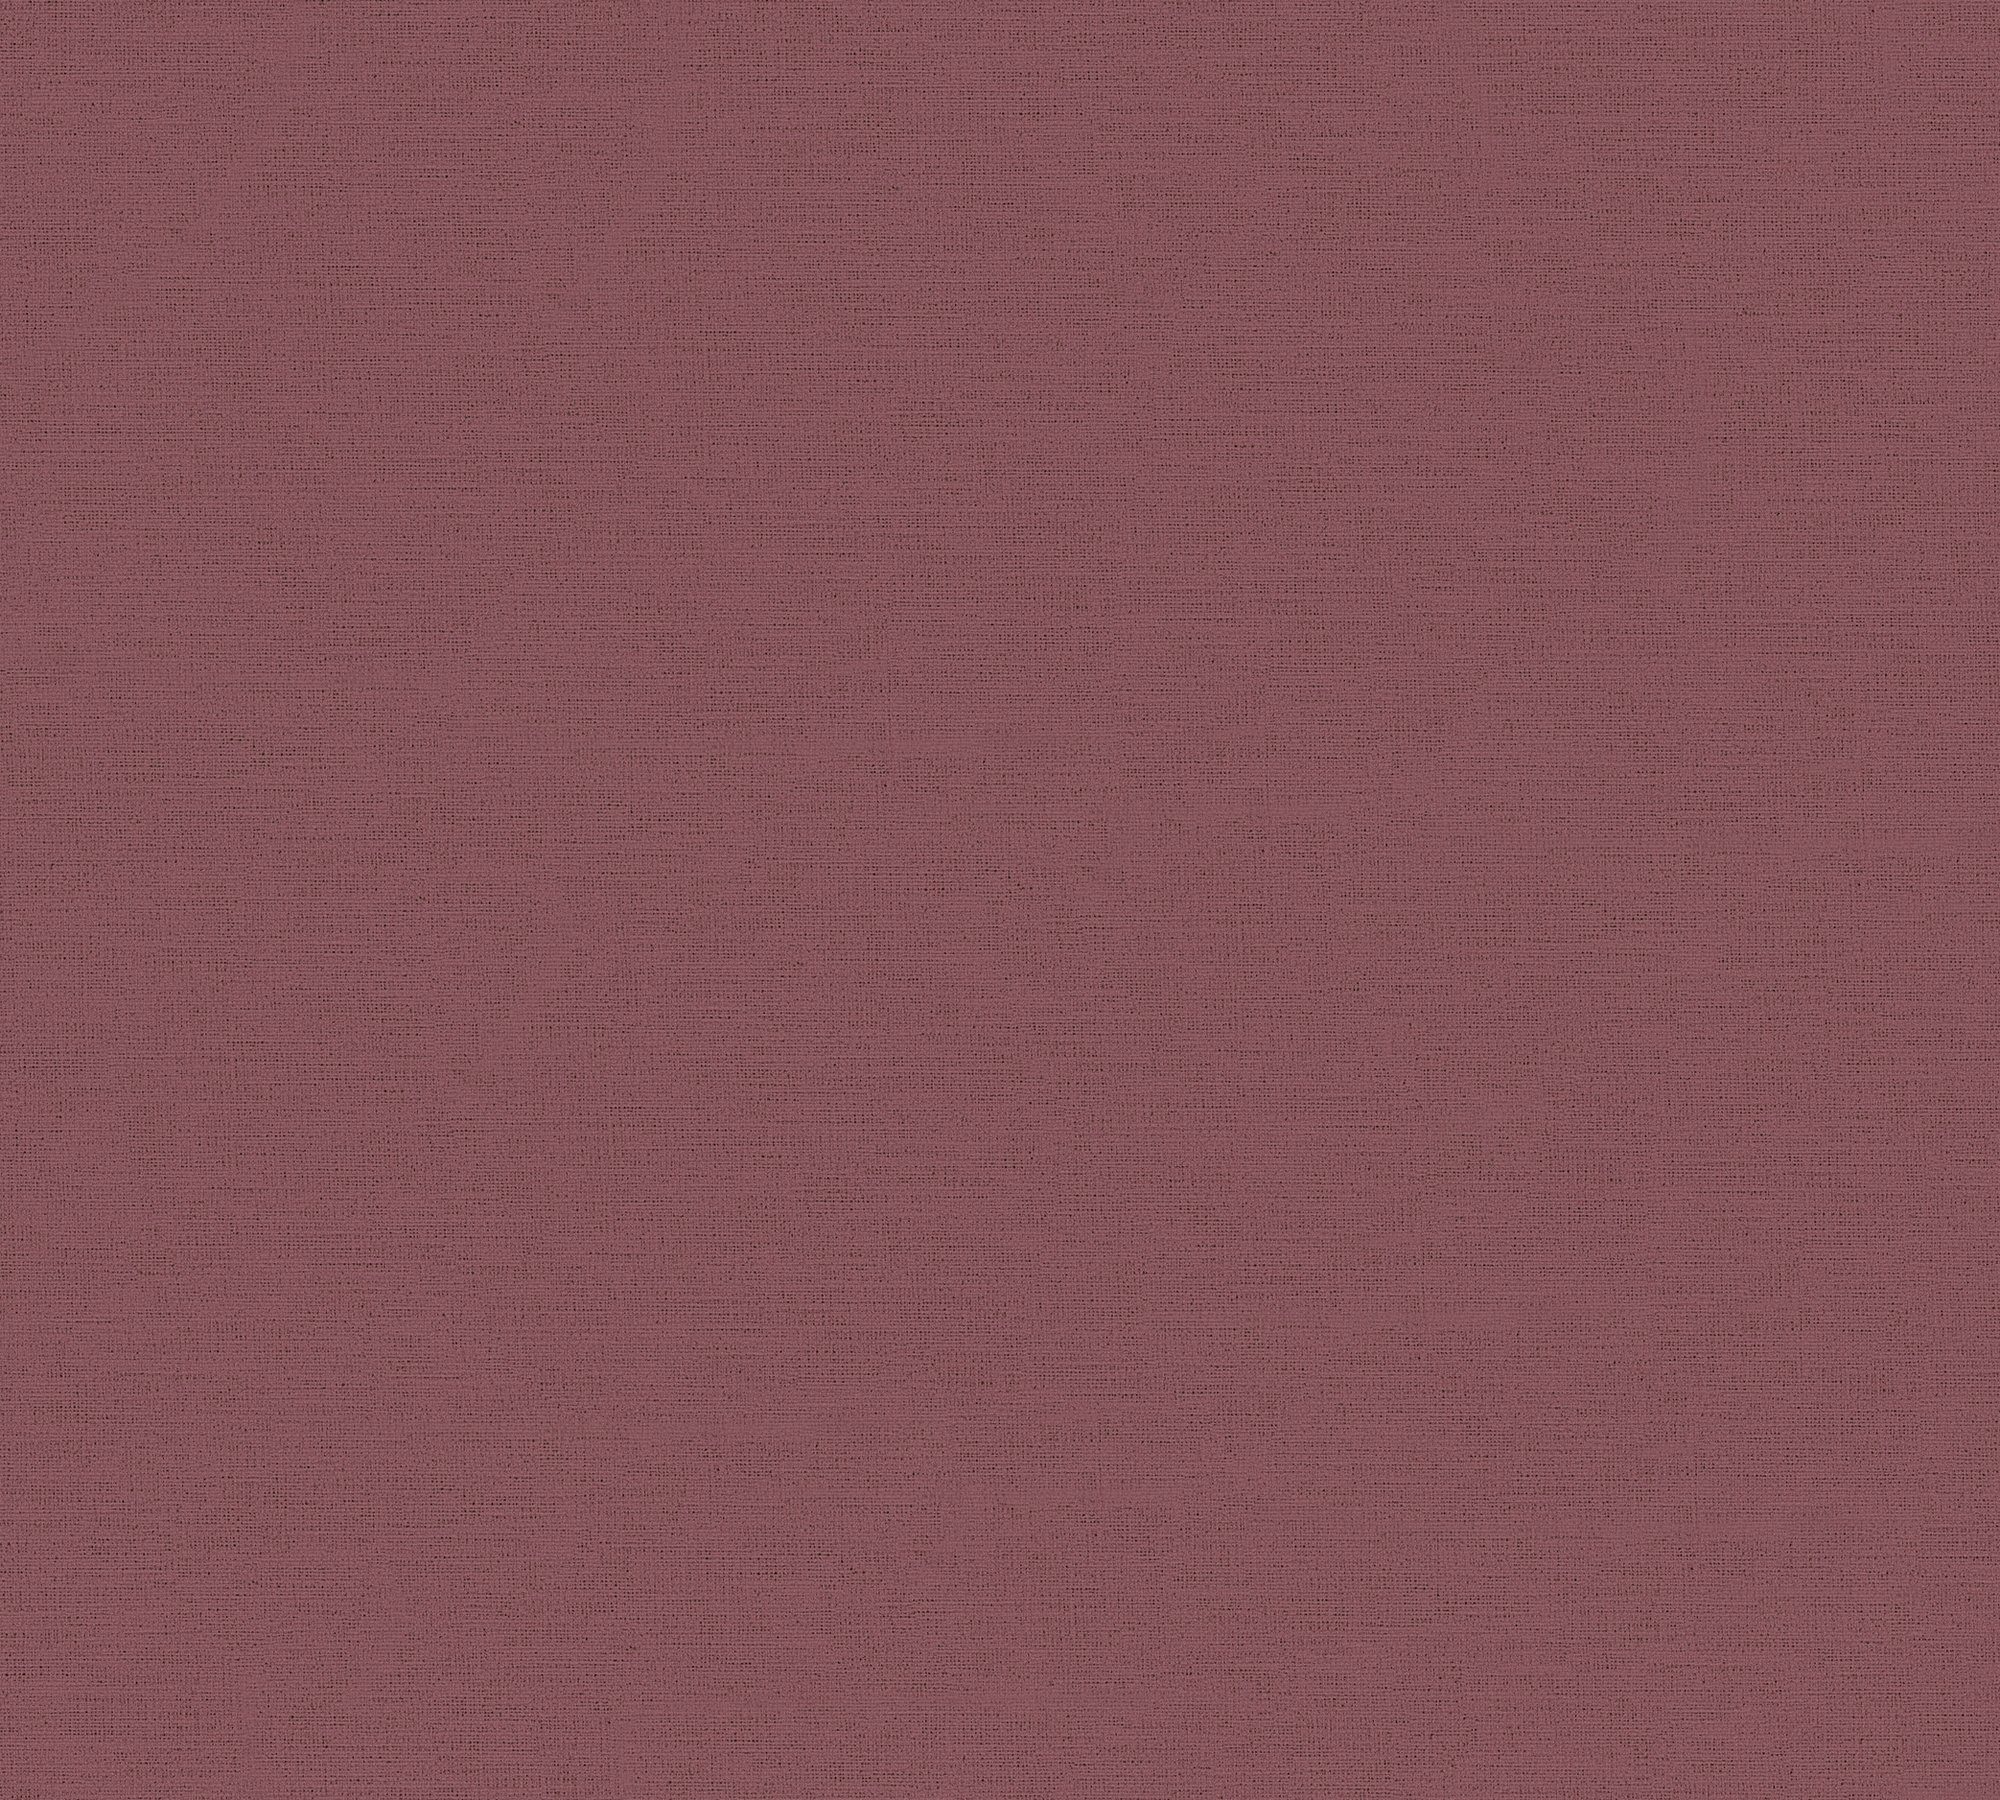 A.S. Création Vliestapete Antigua einfarbige Unitapete matt, Tapete, (1 leicht geprägt, violett,lila,bordeaux St), strukturiert